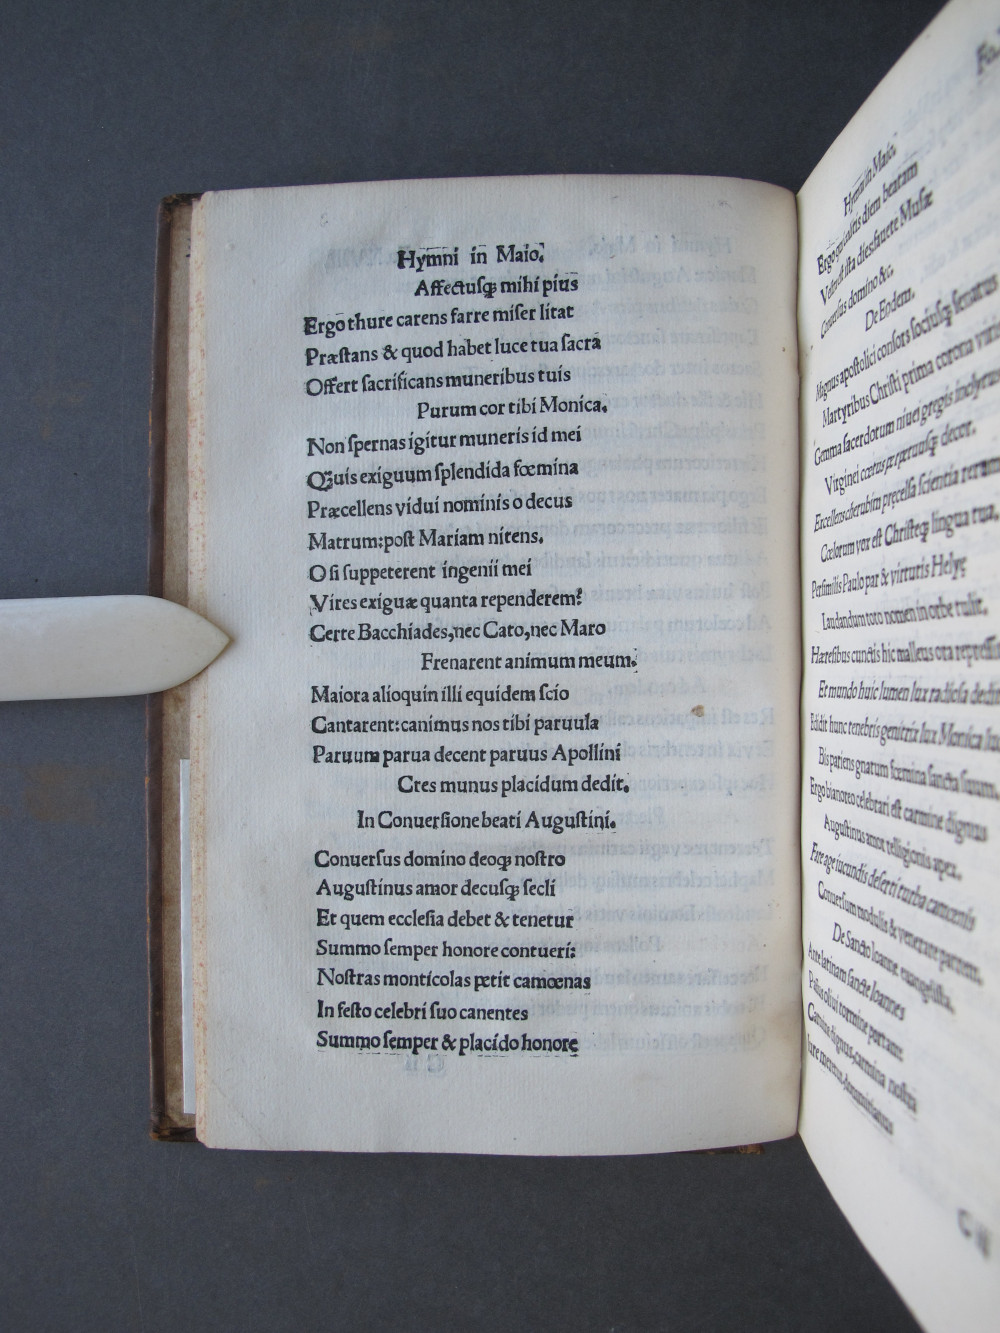 Folio 18 verso